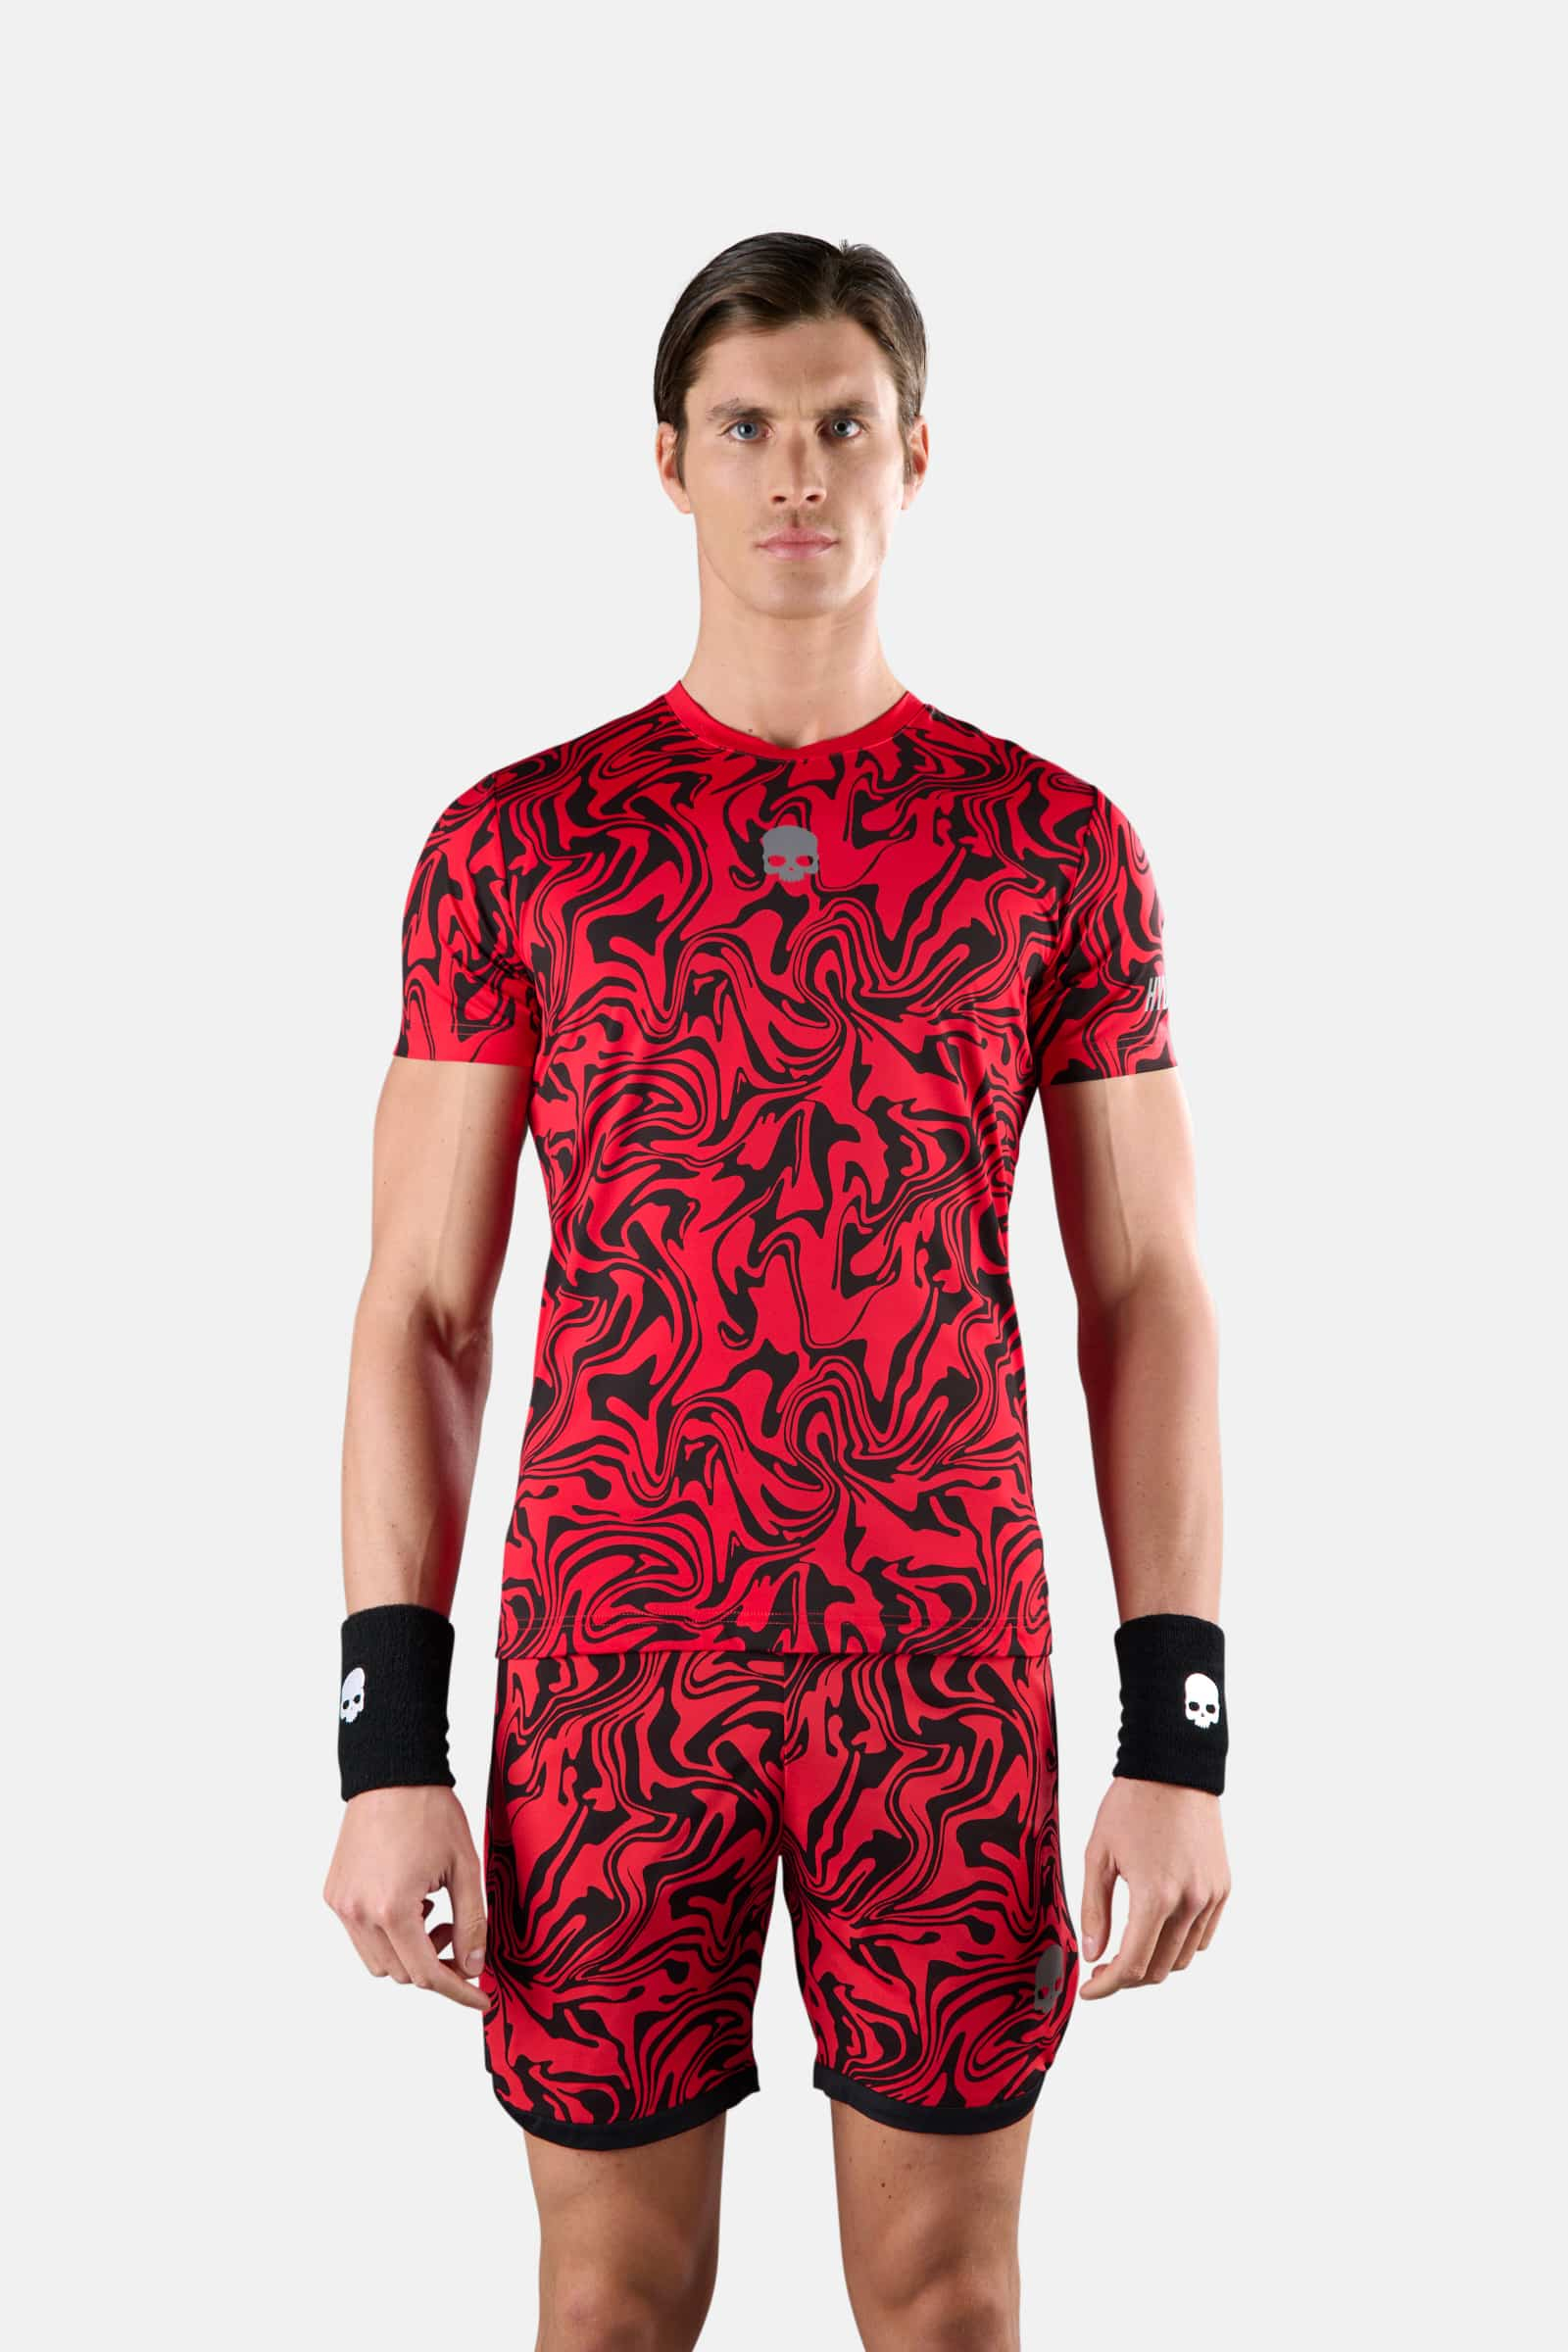 T-SHIRT TECNICA CHROME - RED - Abbigliamento sportivo | Hydrogen